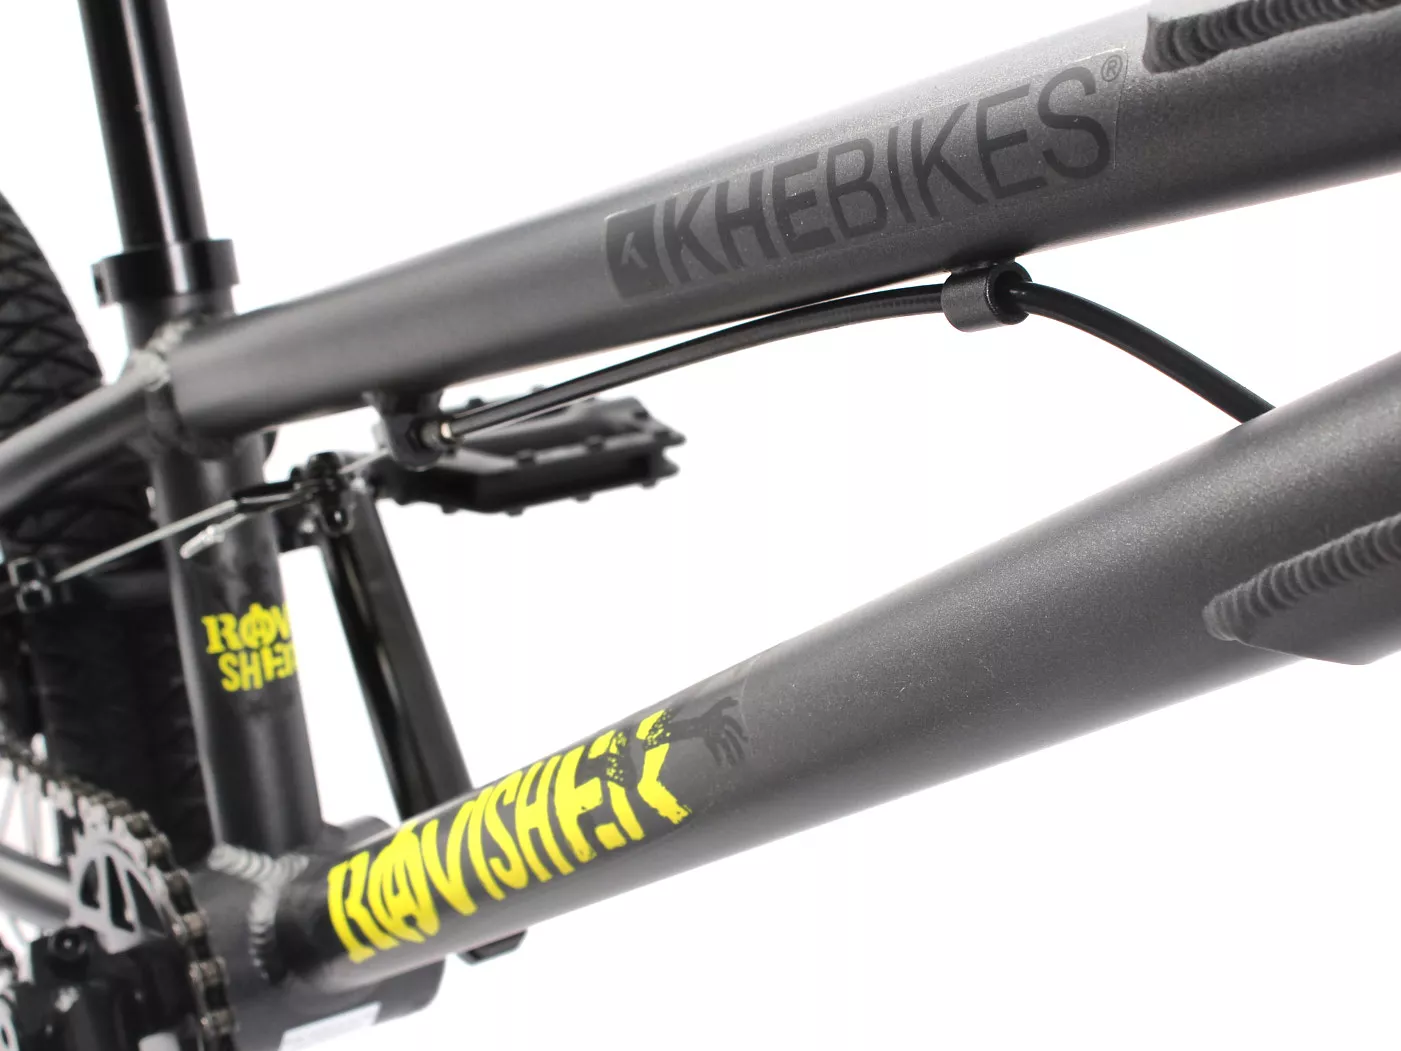 Bicicleta BMX aluminio KHE RAVISHER LL 18 pulgadas 8,9kg